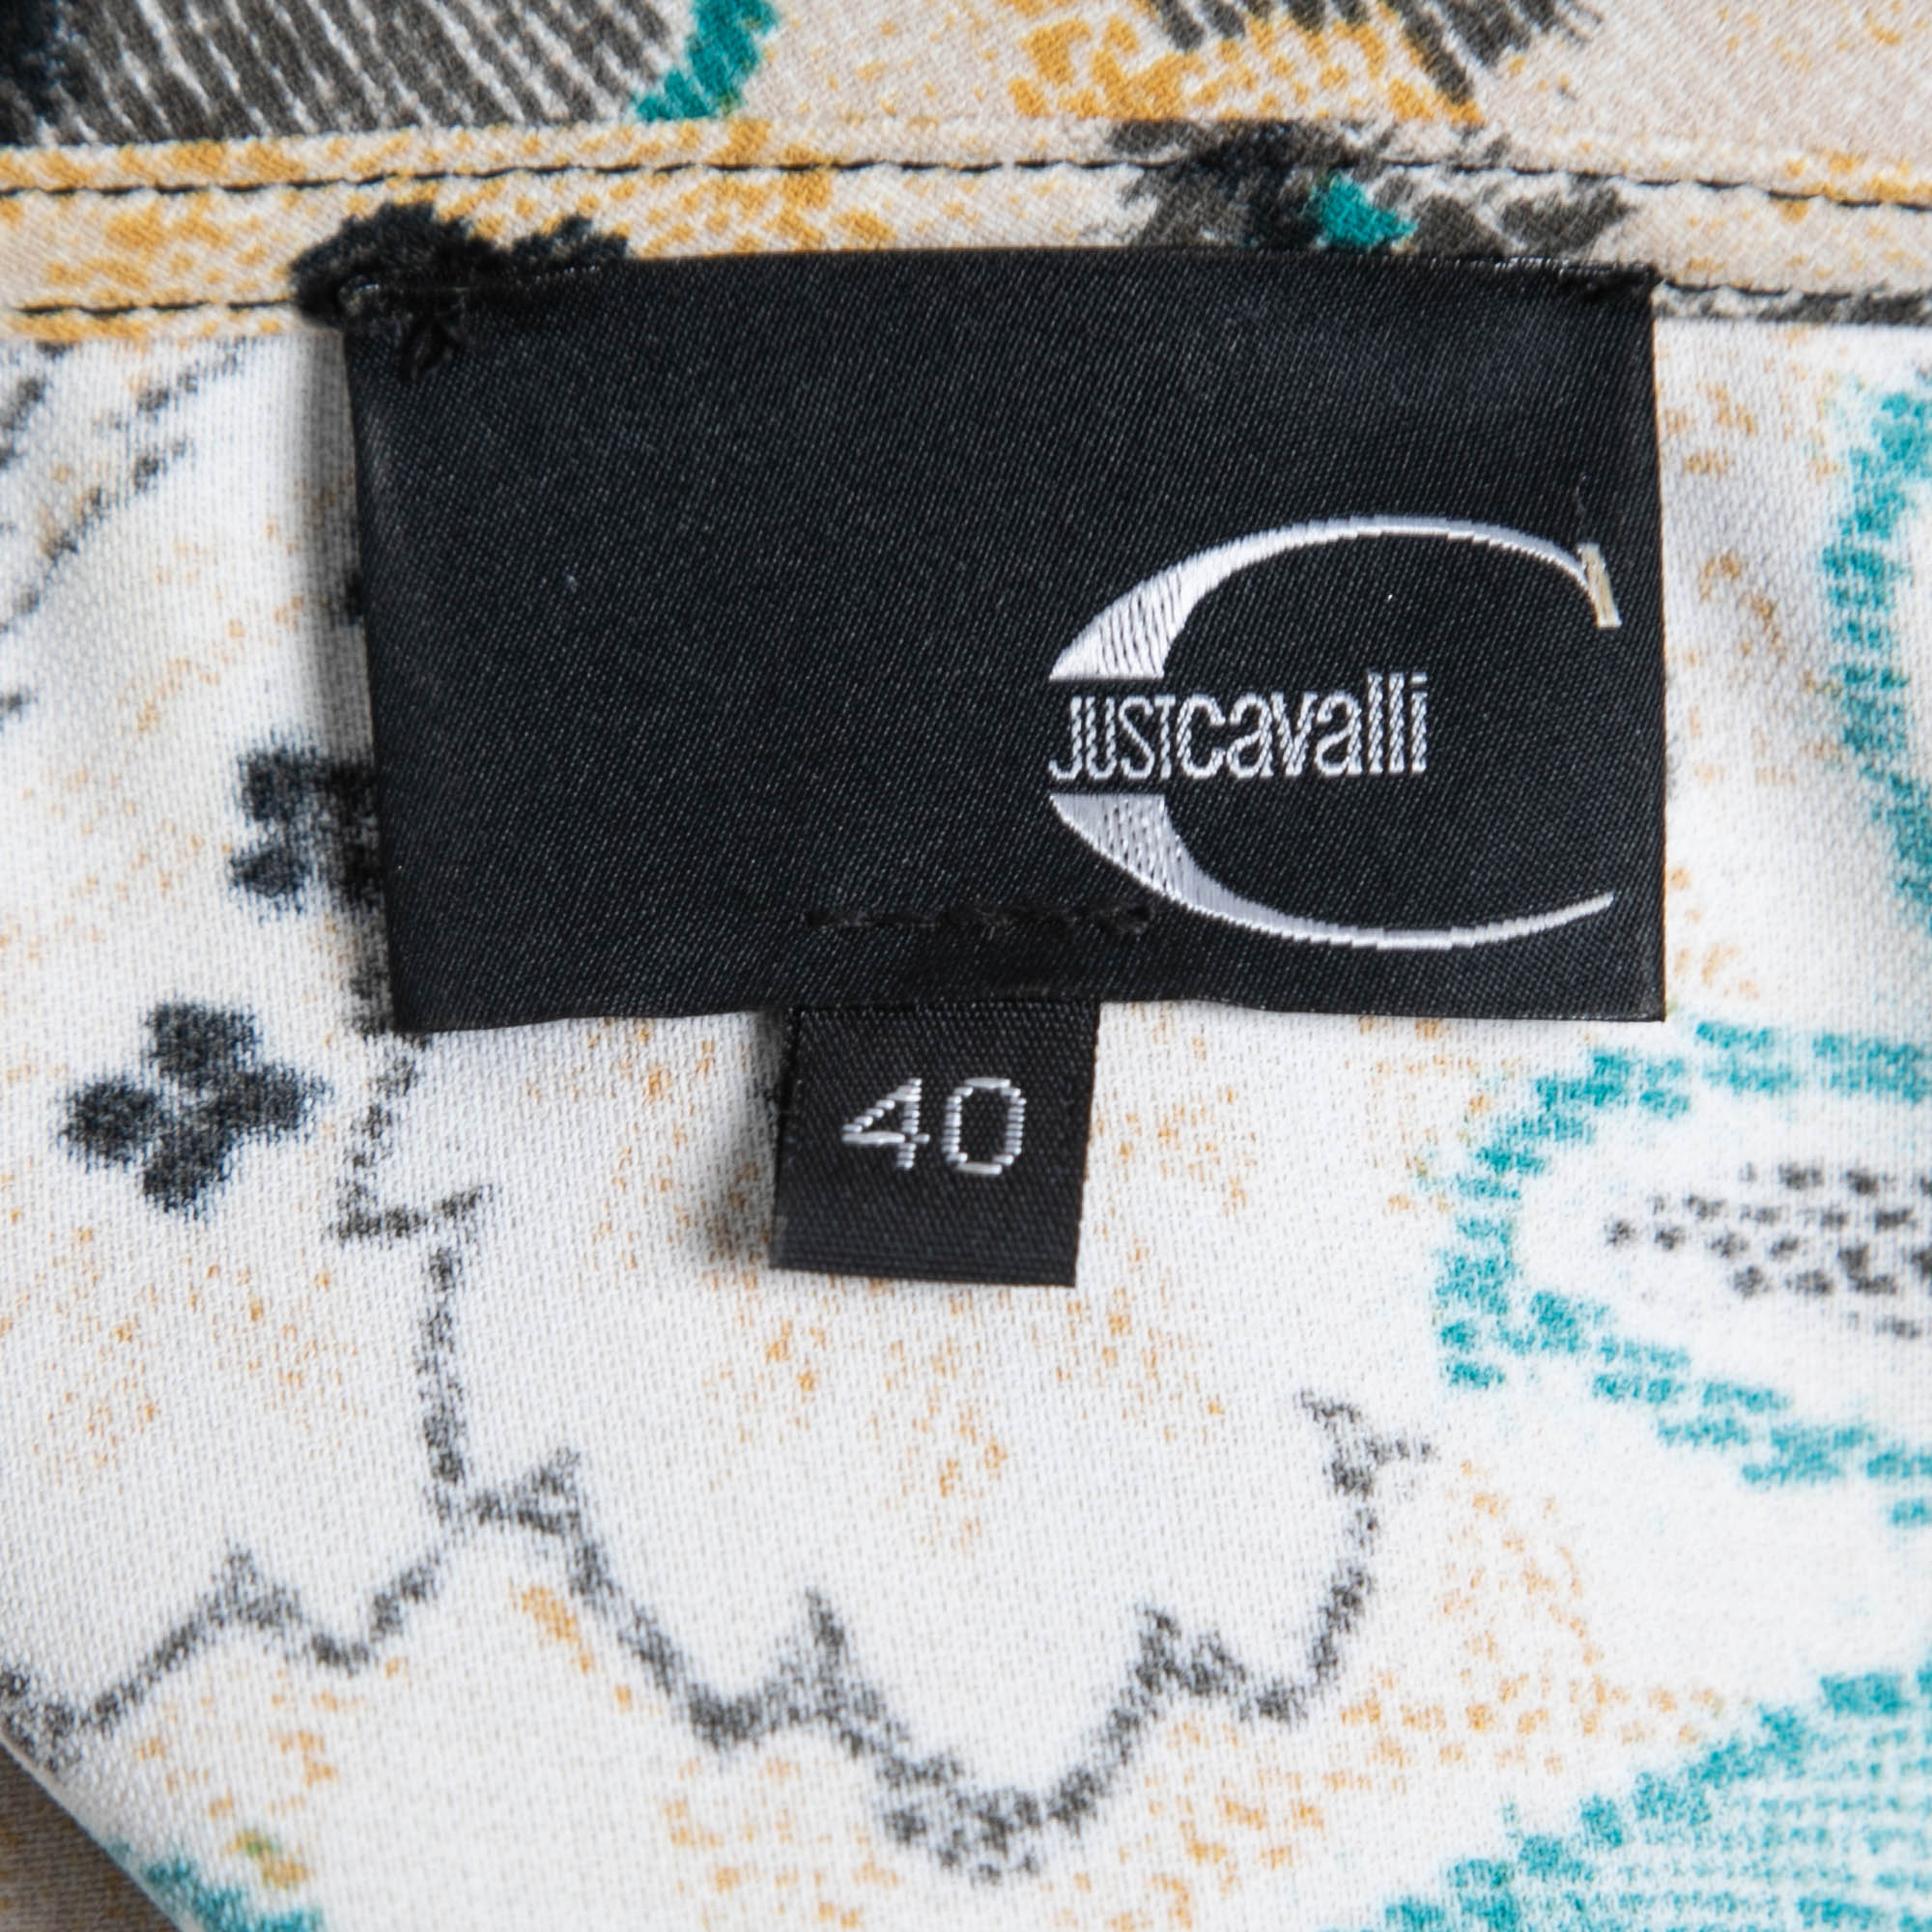 Just Cavalli Multicolor Printed Crepe Ruffled Short Dress S